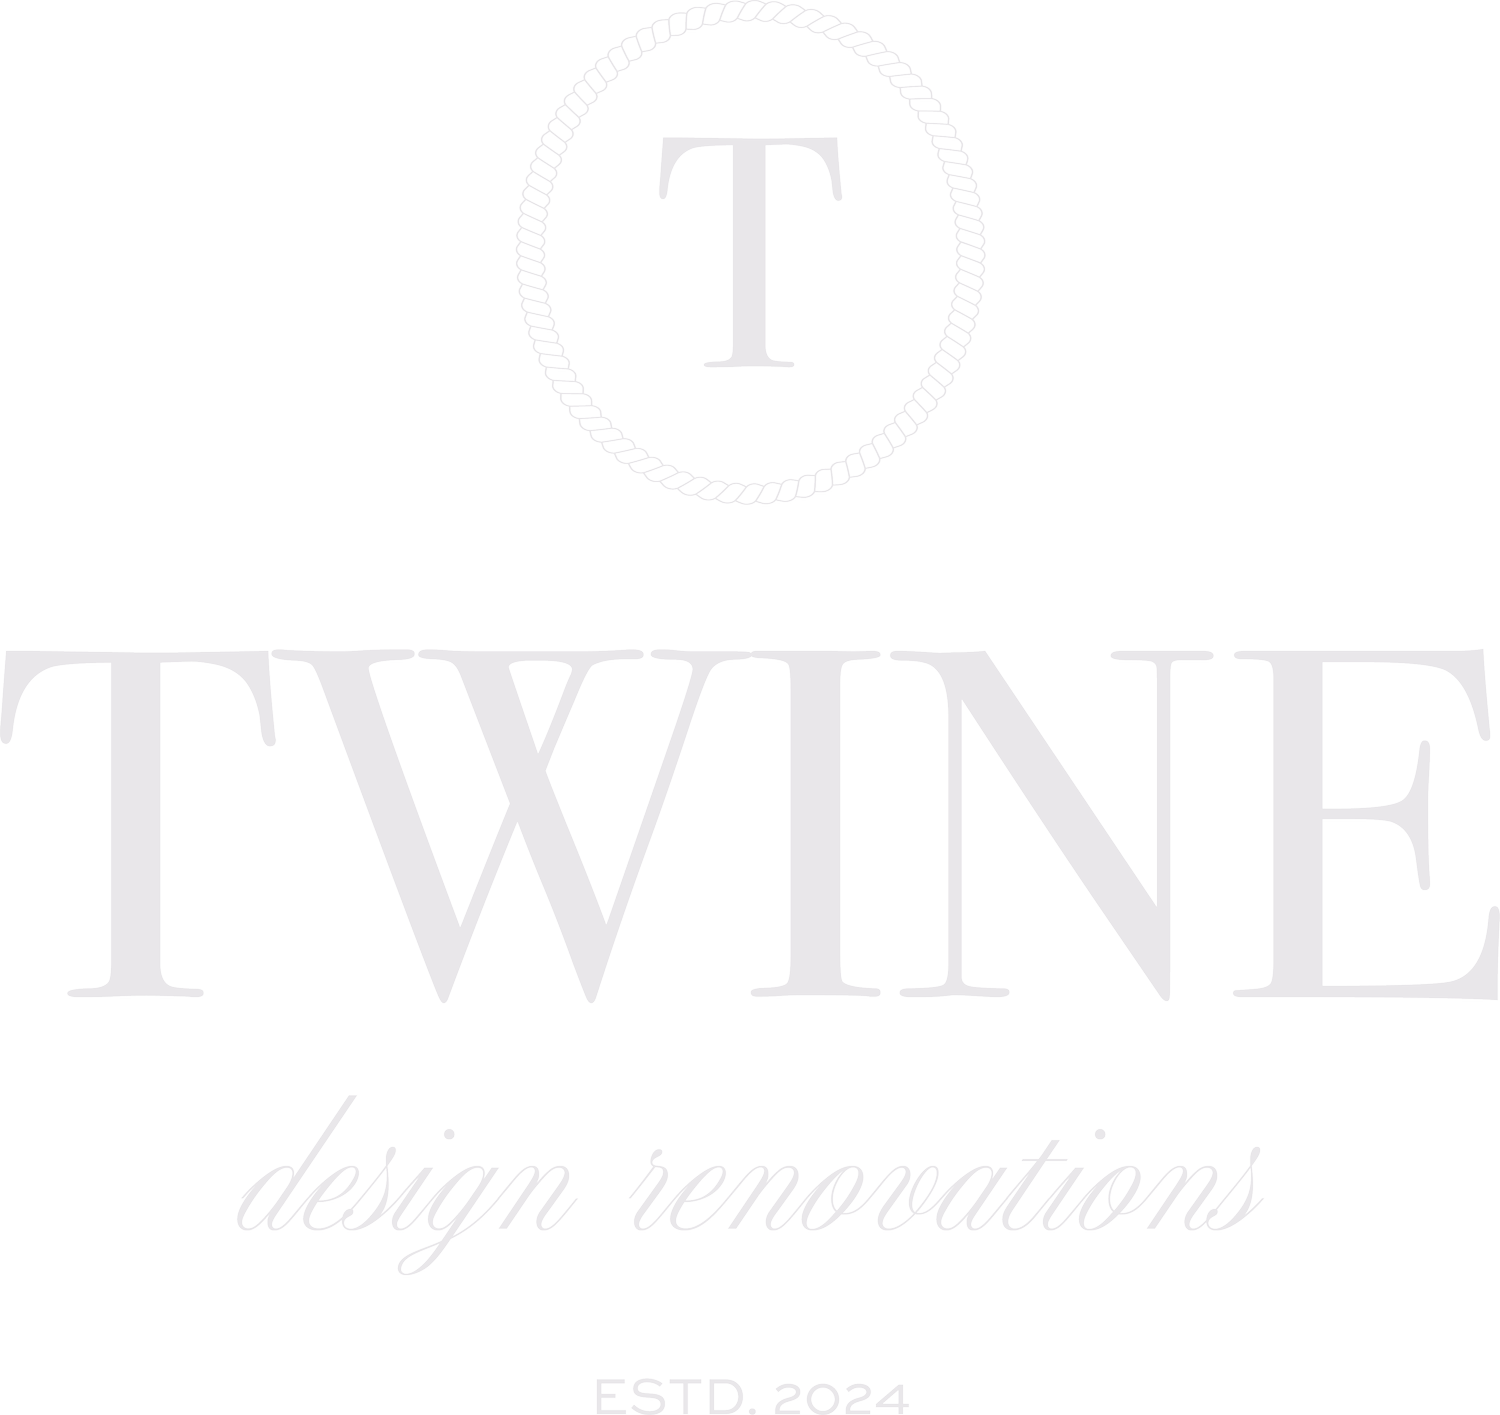 Twine Design Renovations